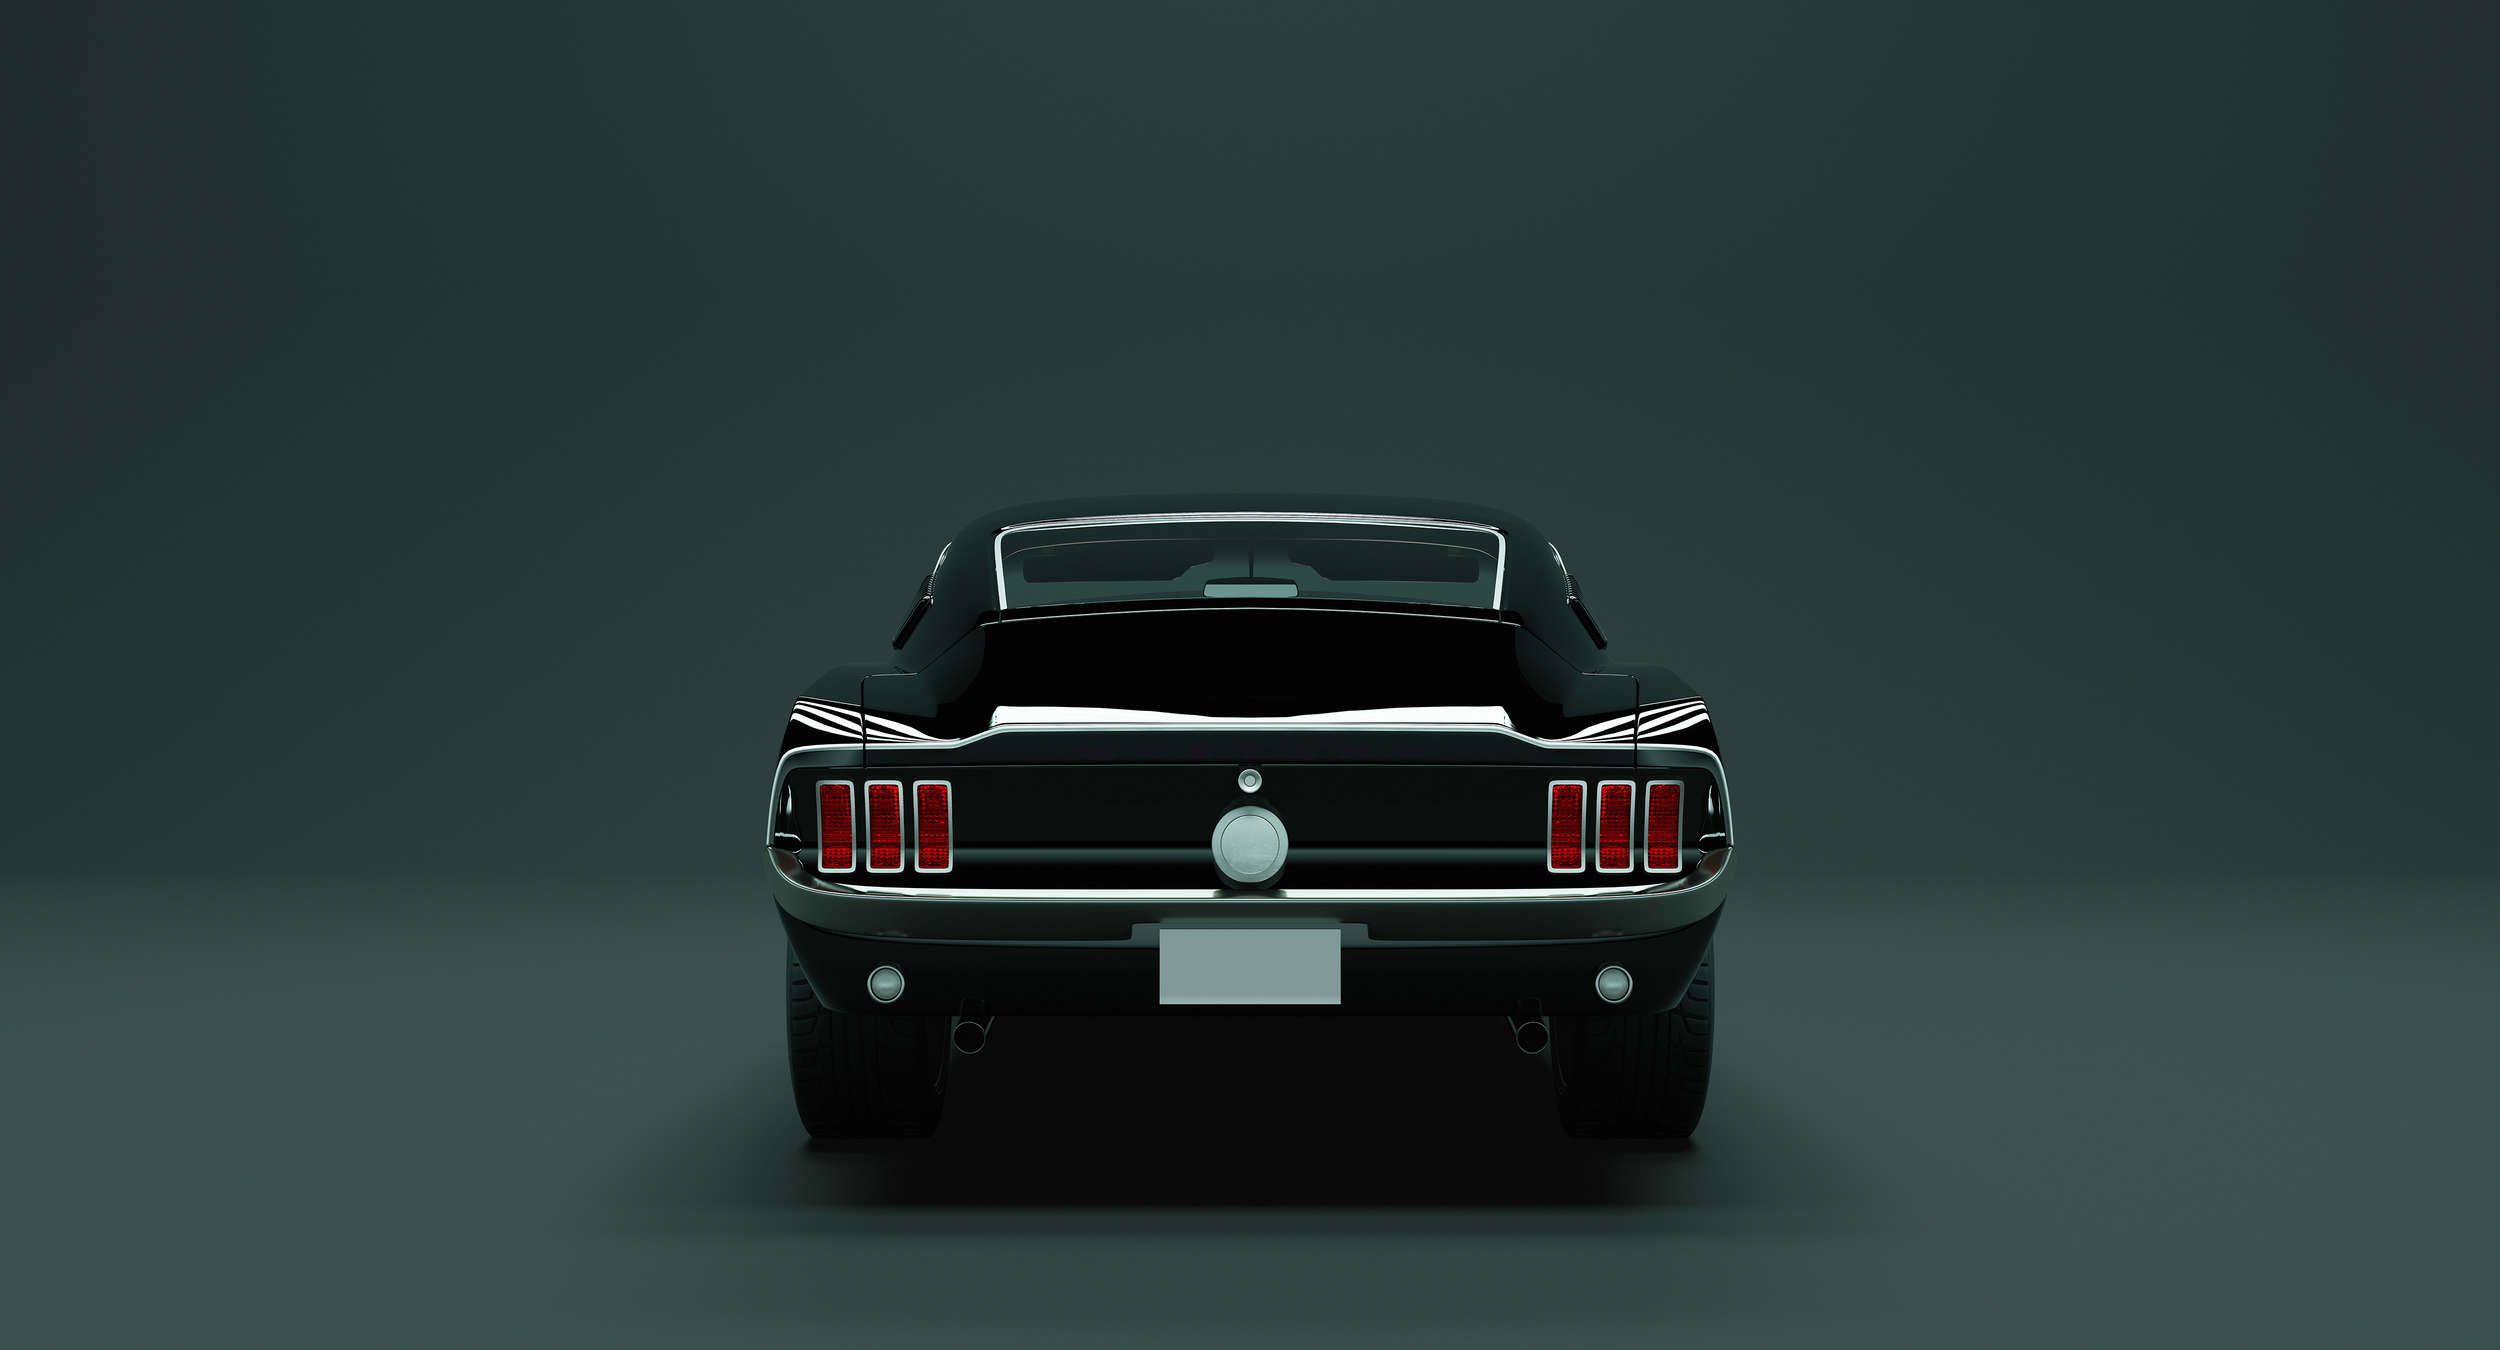             Mustang 3 - Carta da parati American Muscle Car - Blu, nero | Pile liscio premium
        